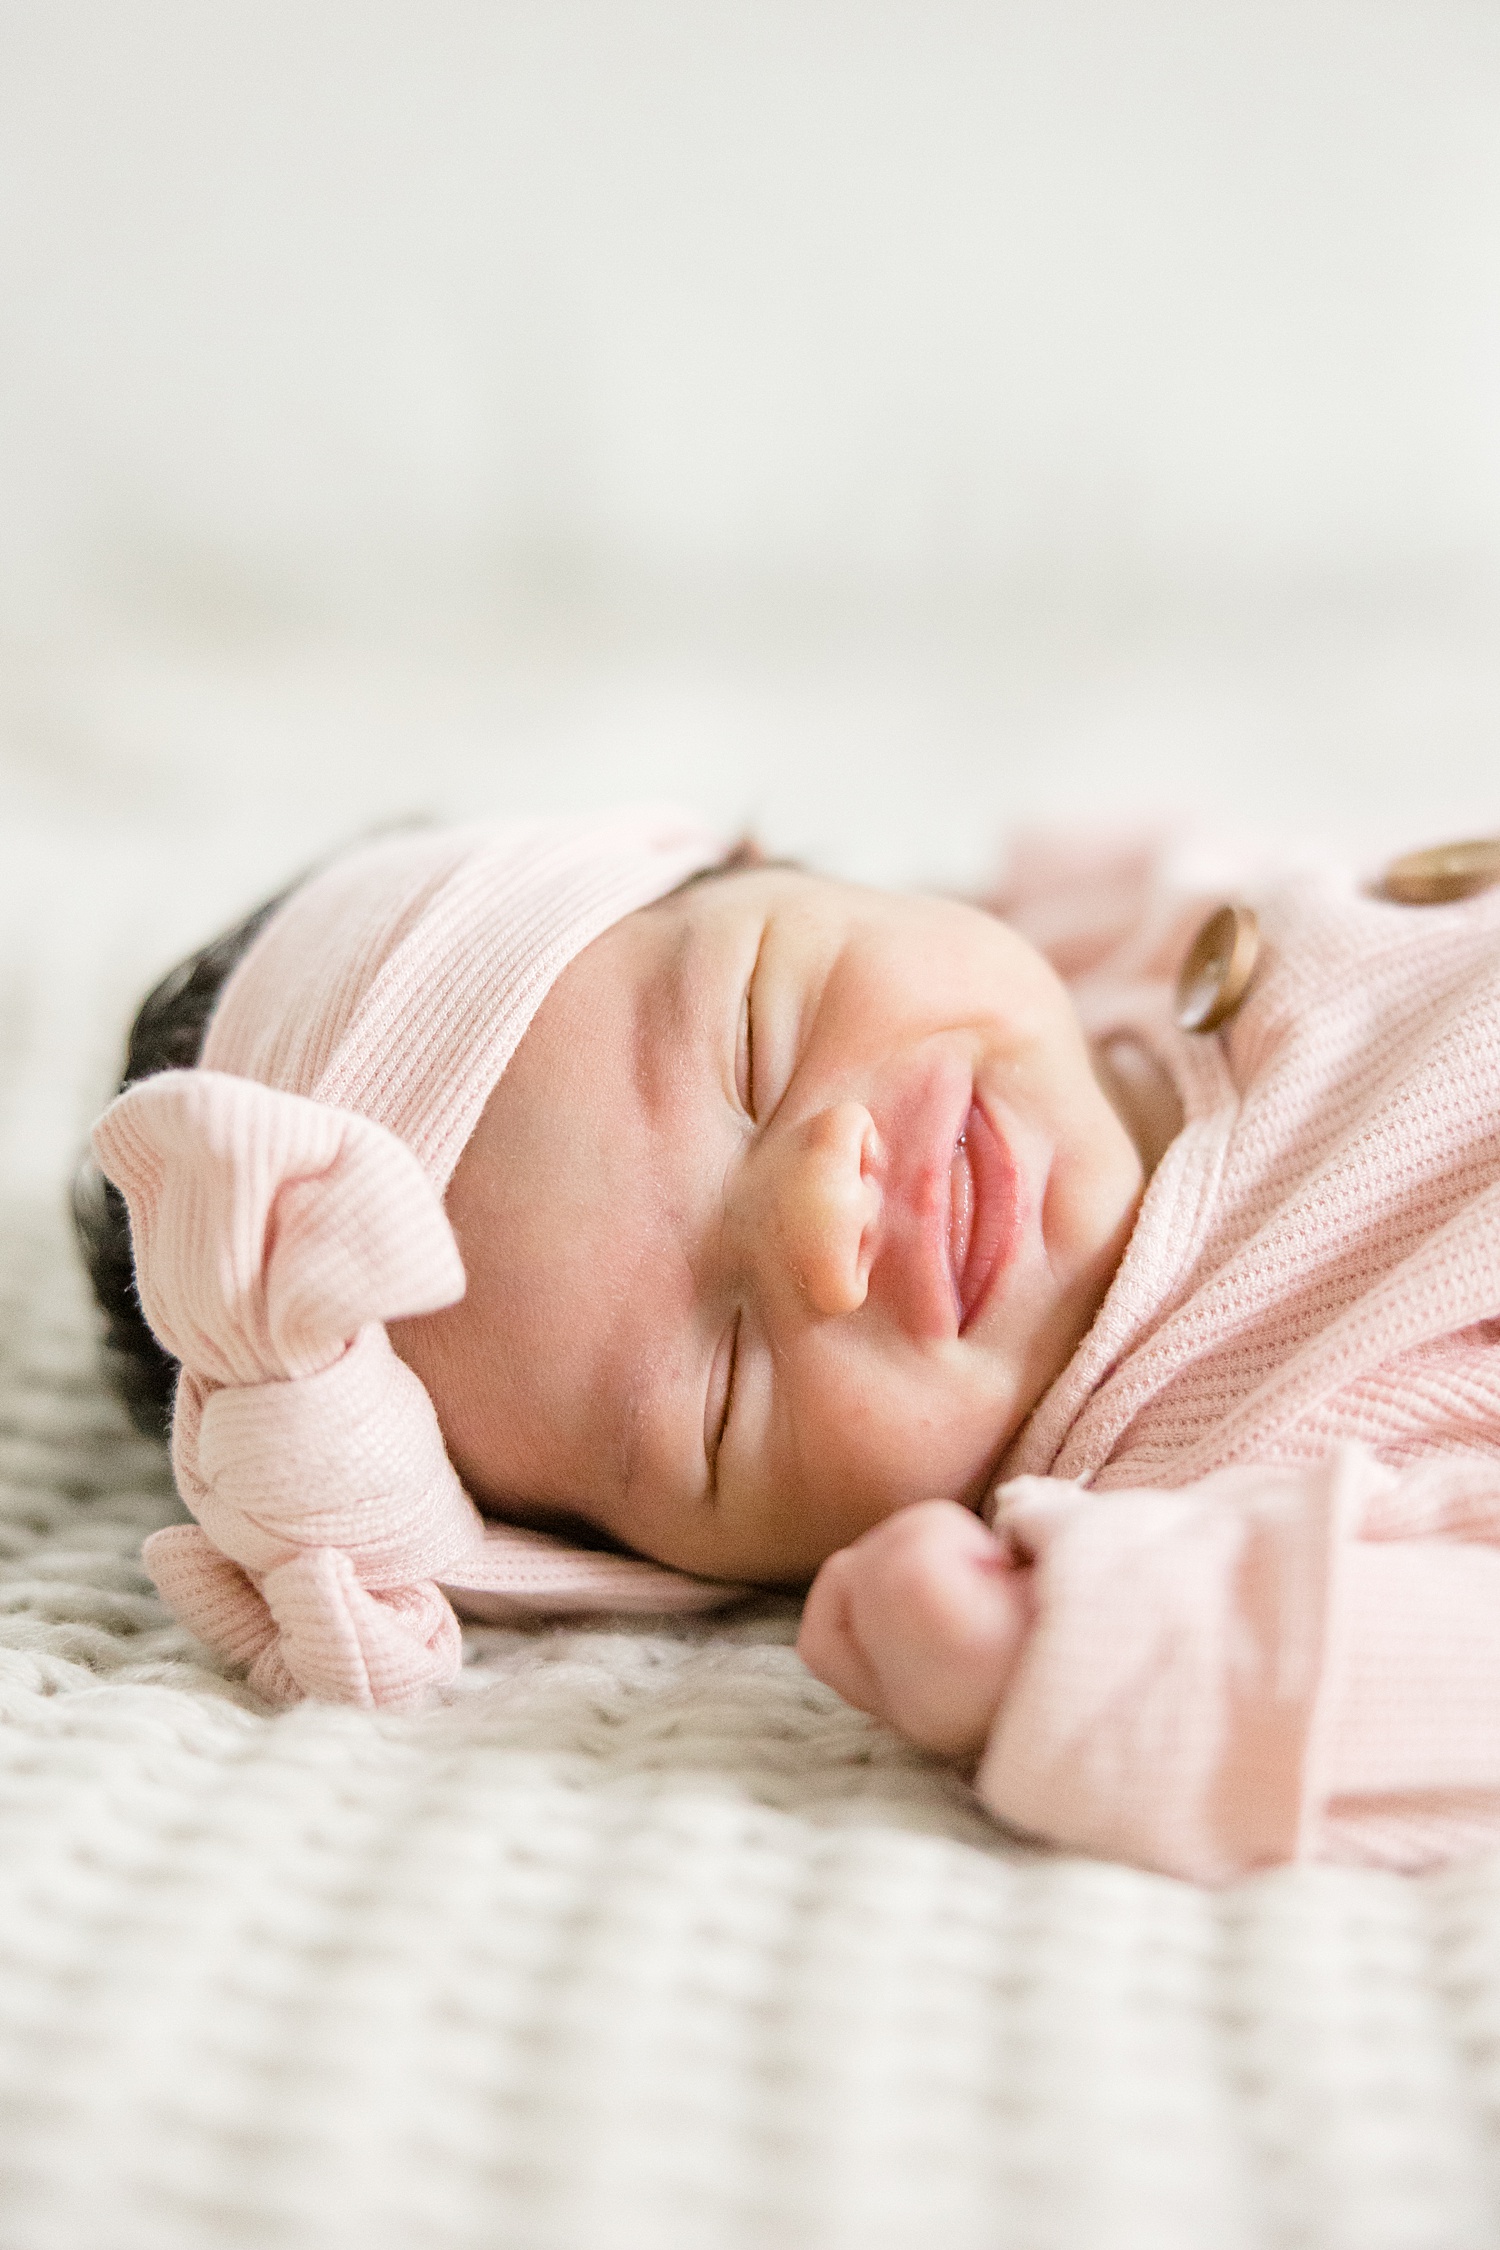 newborn smiles in her sleep during In-Home Newborn Session by Birmingham Newborn Photographer Chelsea Morton